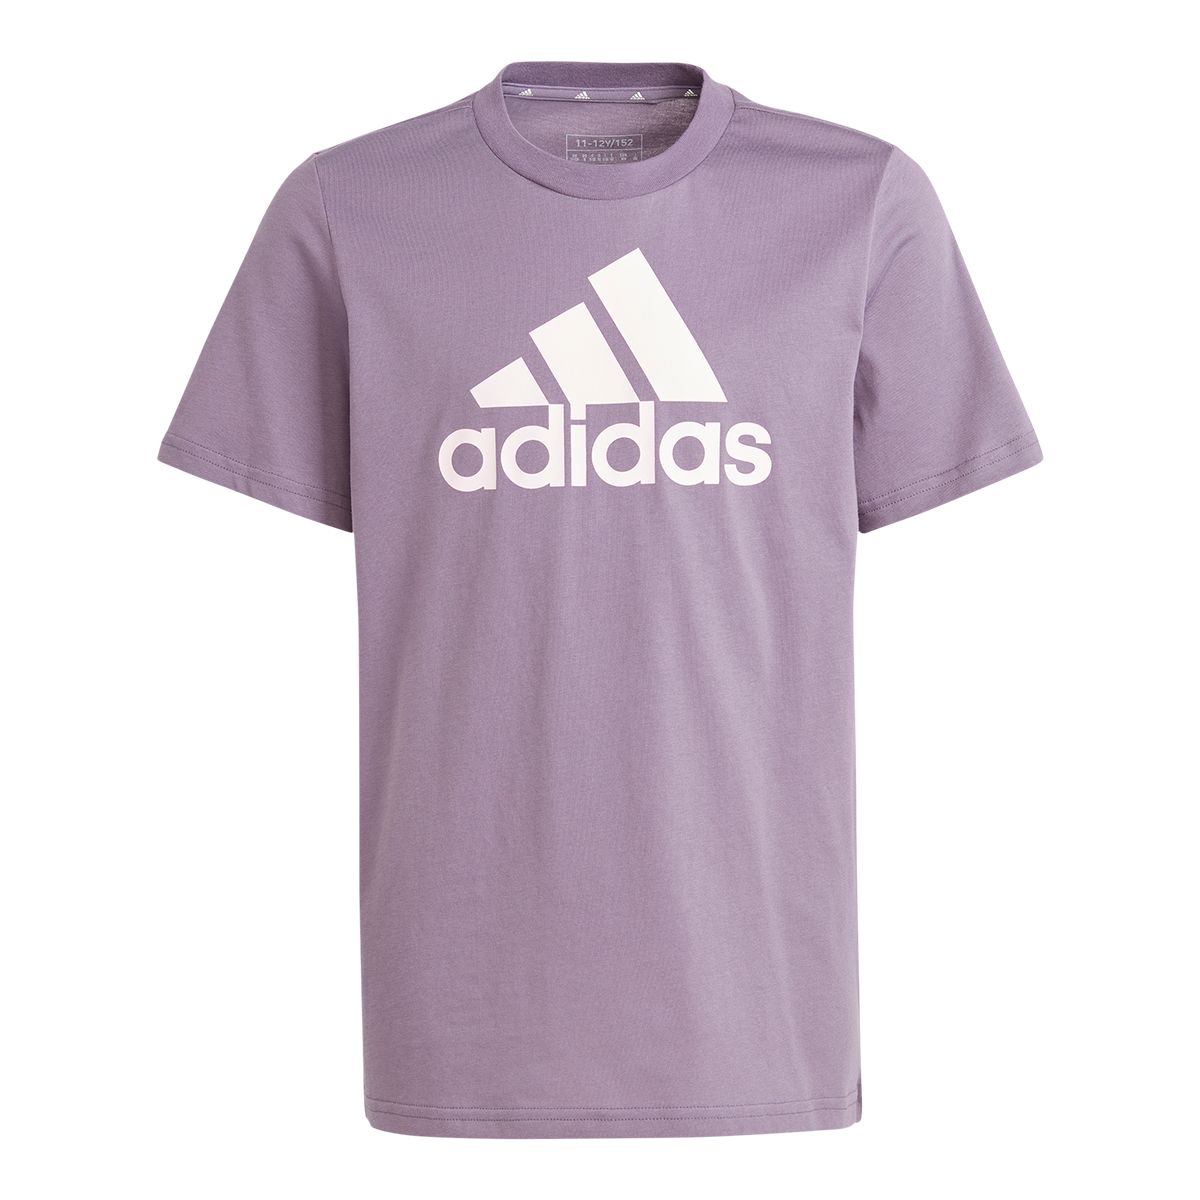 Image of adidas Girls' Big Logo T Shirt